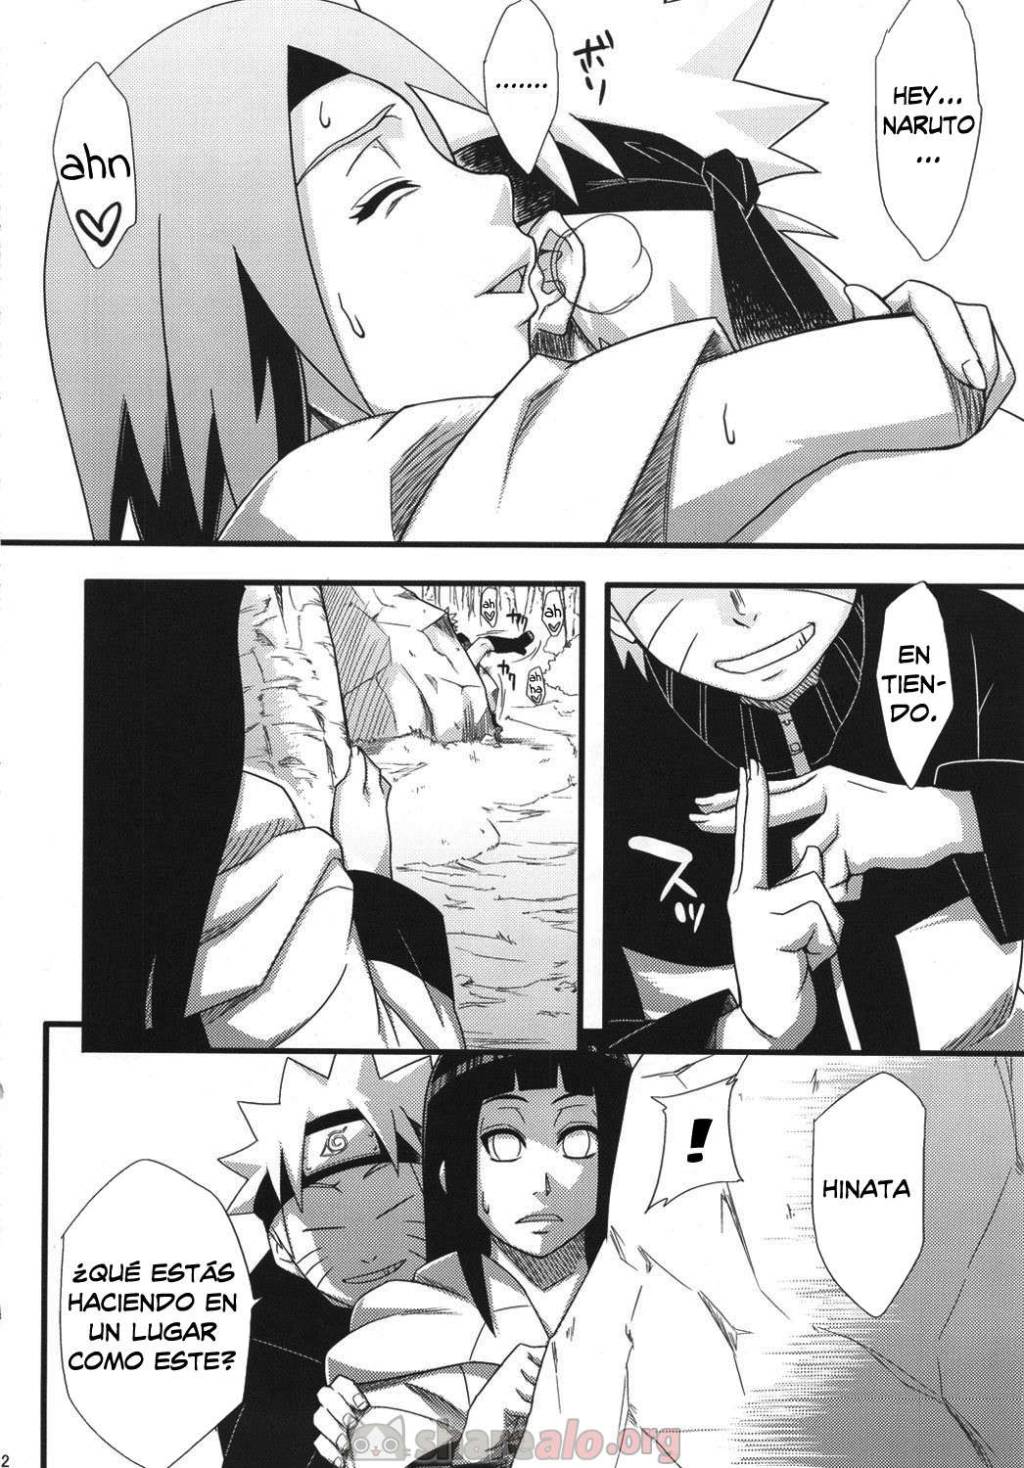 Saboten Campus (Naruto) - 11 - Comics Porno - Hentai Manga - Cartoon XXX